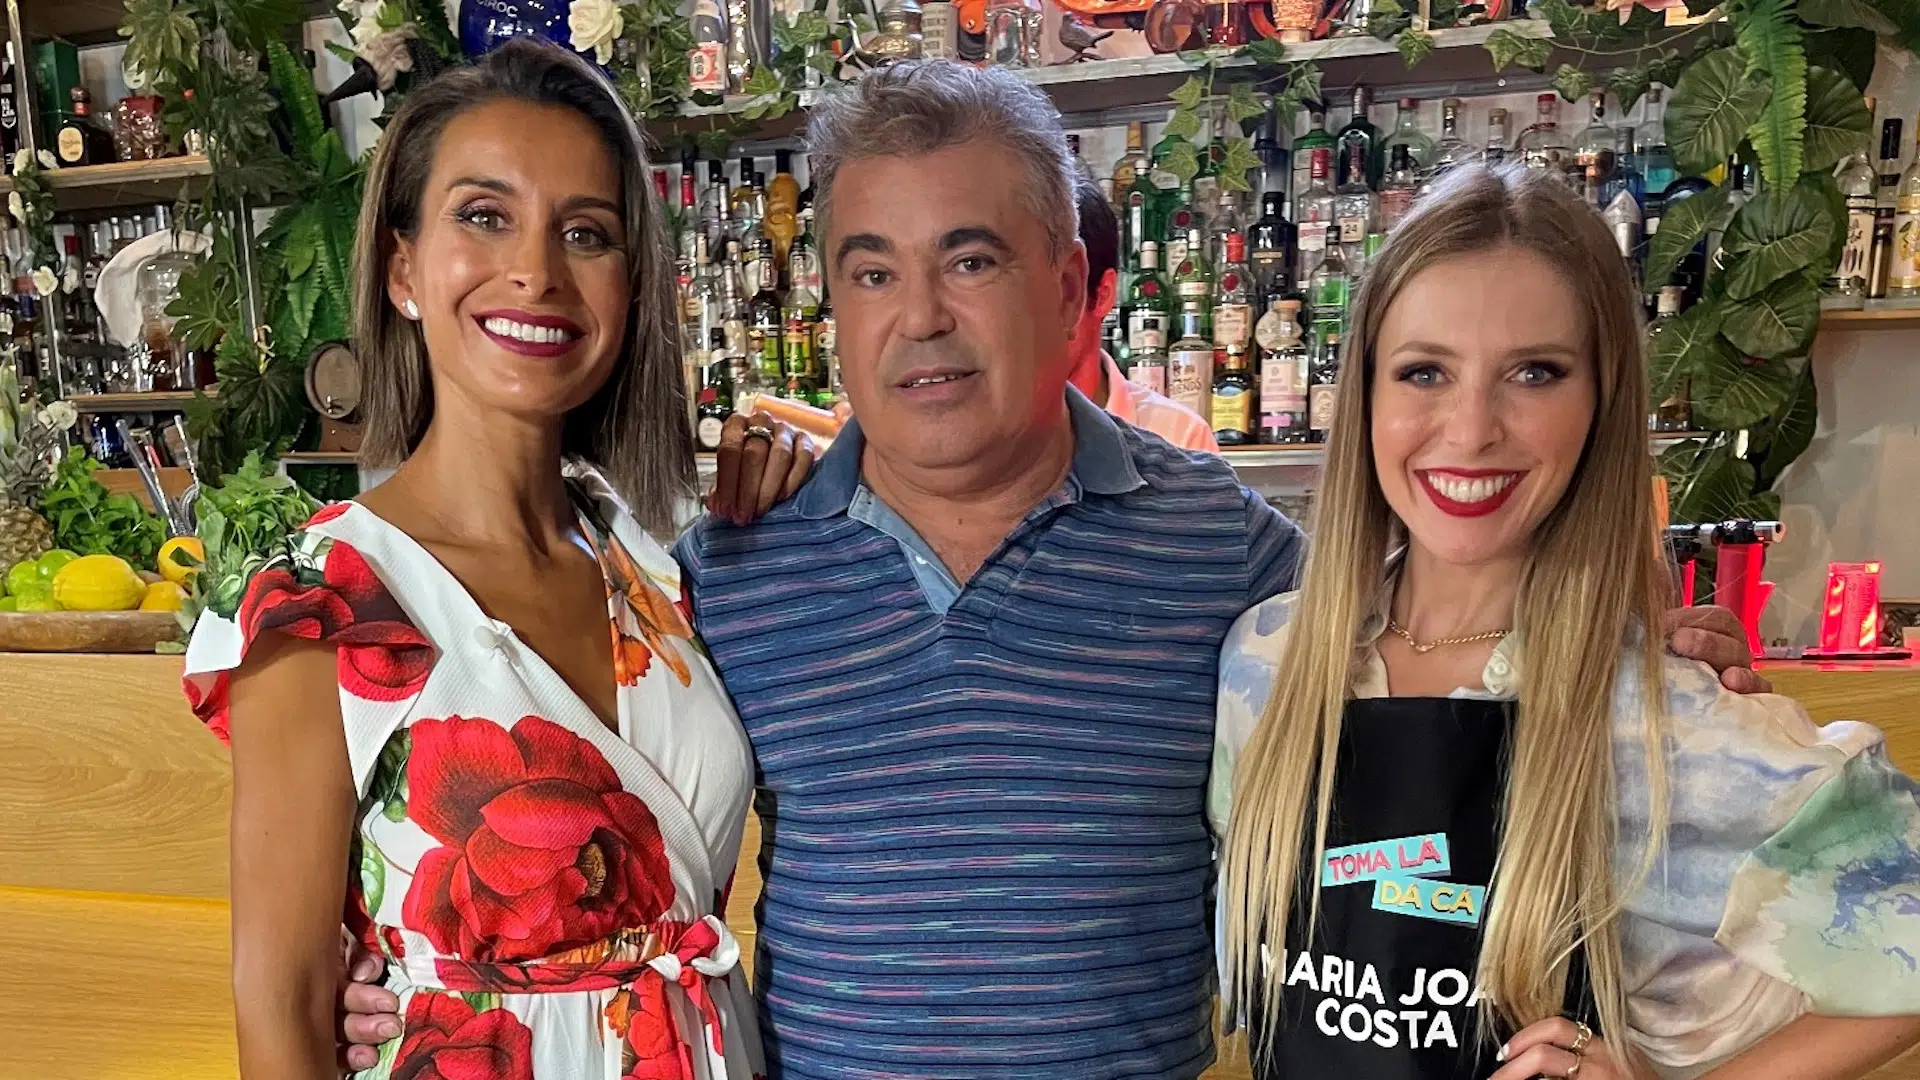 Maria Joao Costa, Toy, Monica Jardim, Toma La Da Ca